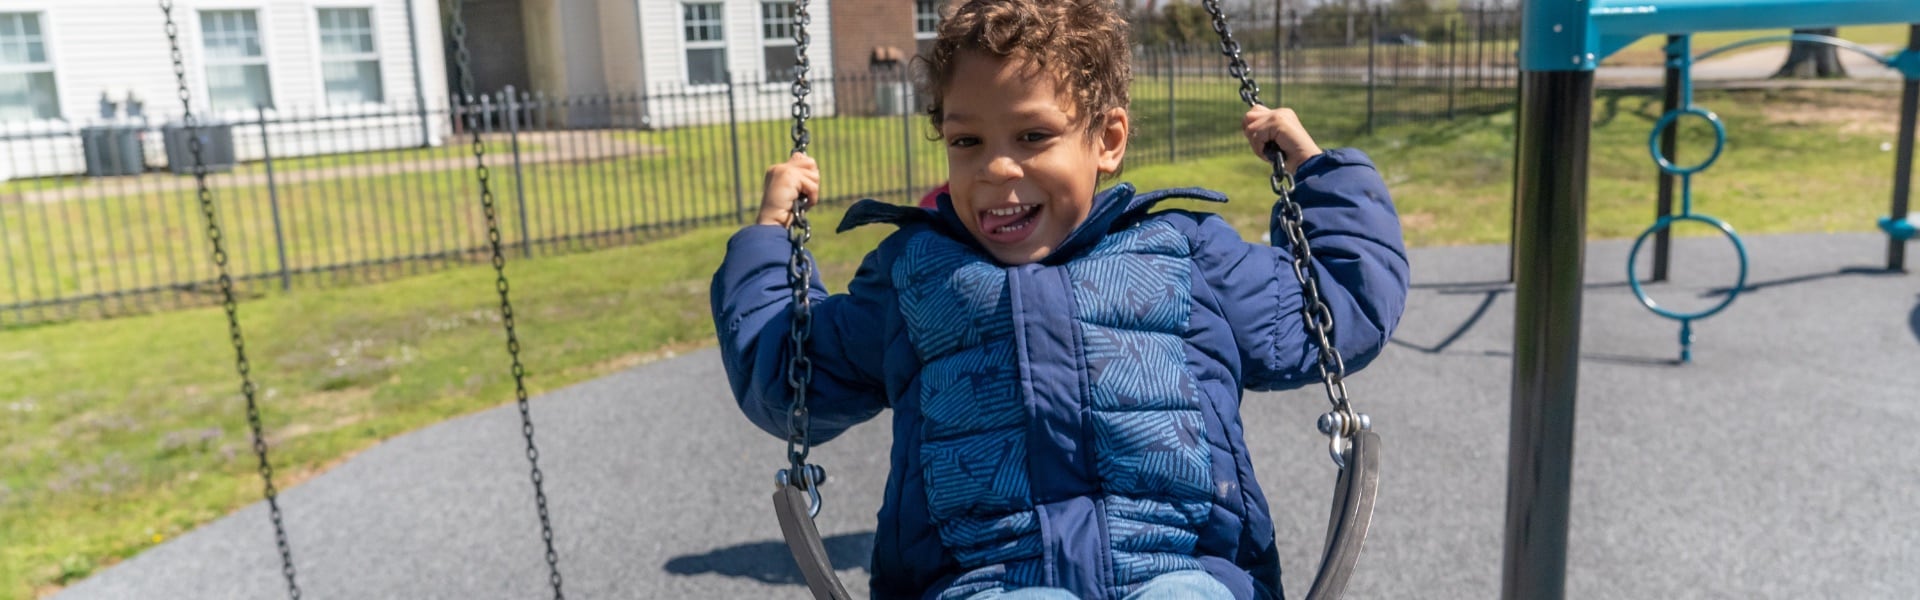 A boy swinging on a playground